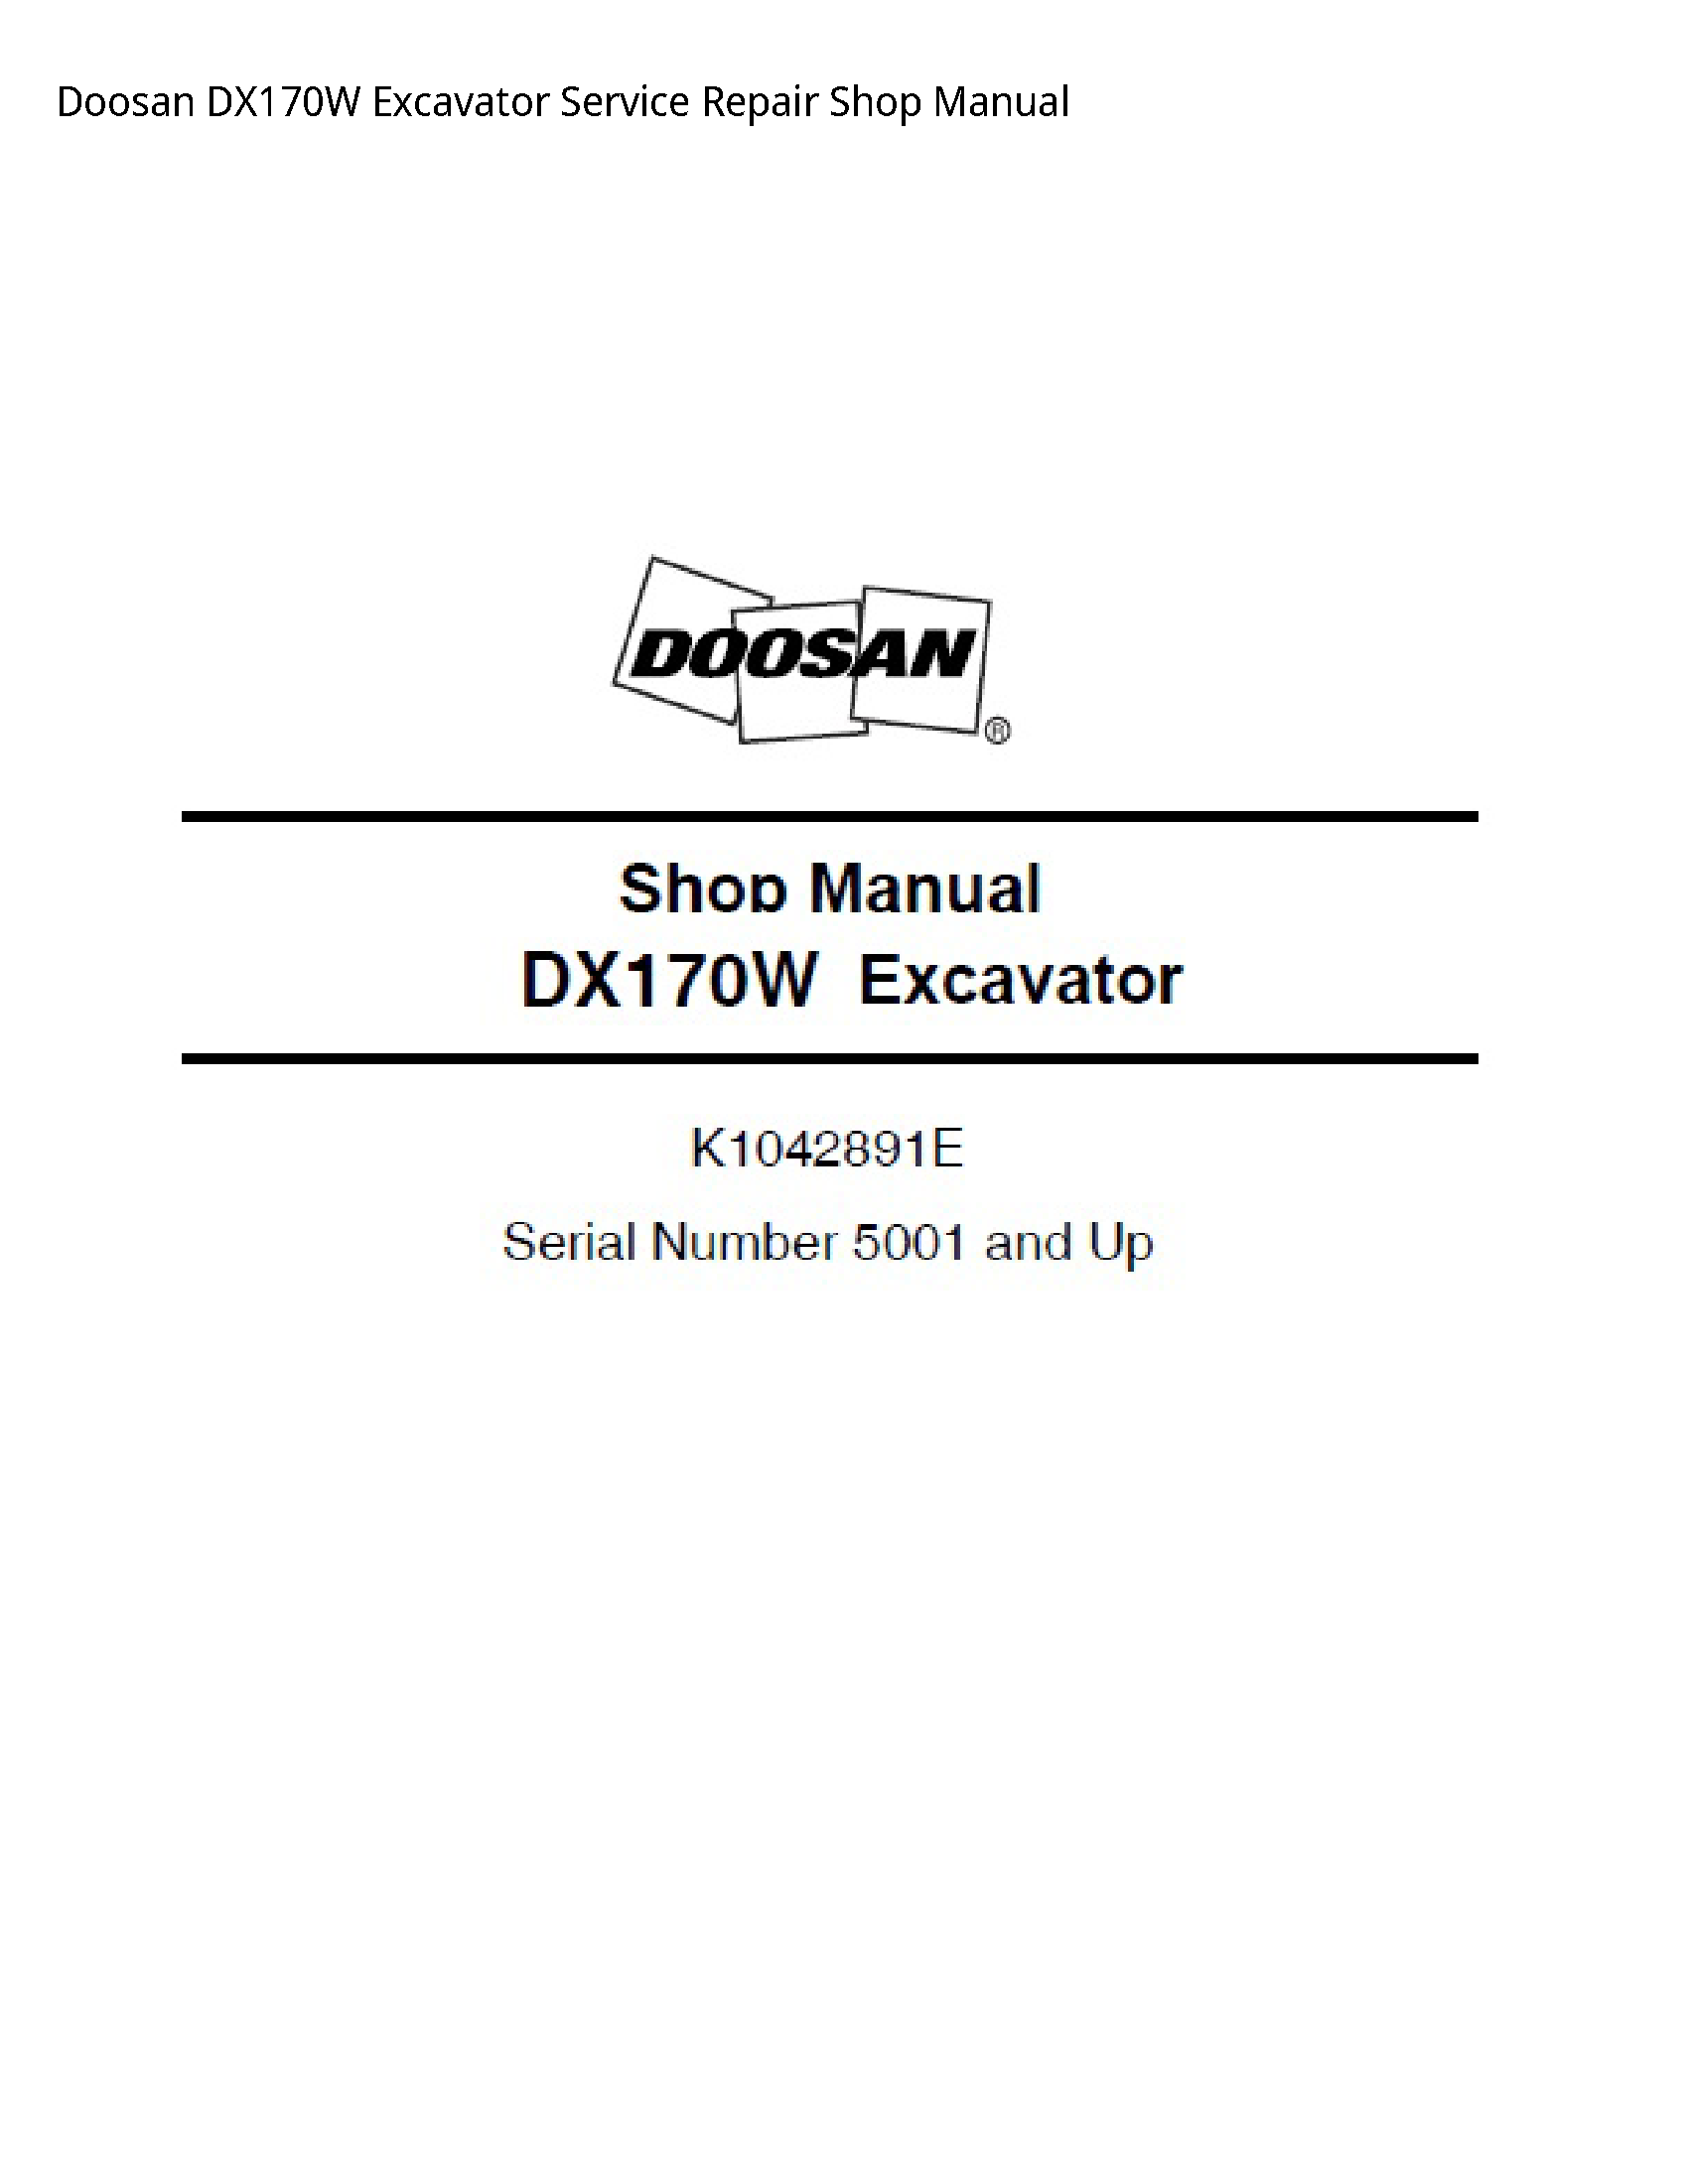 Doosan DX170W Excavator manual